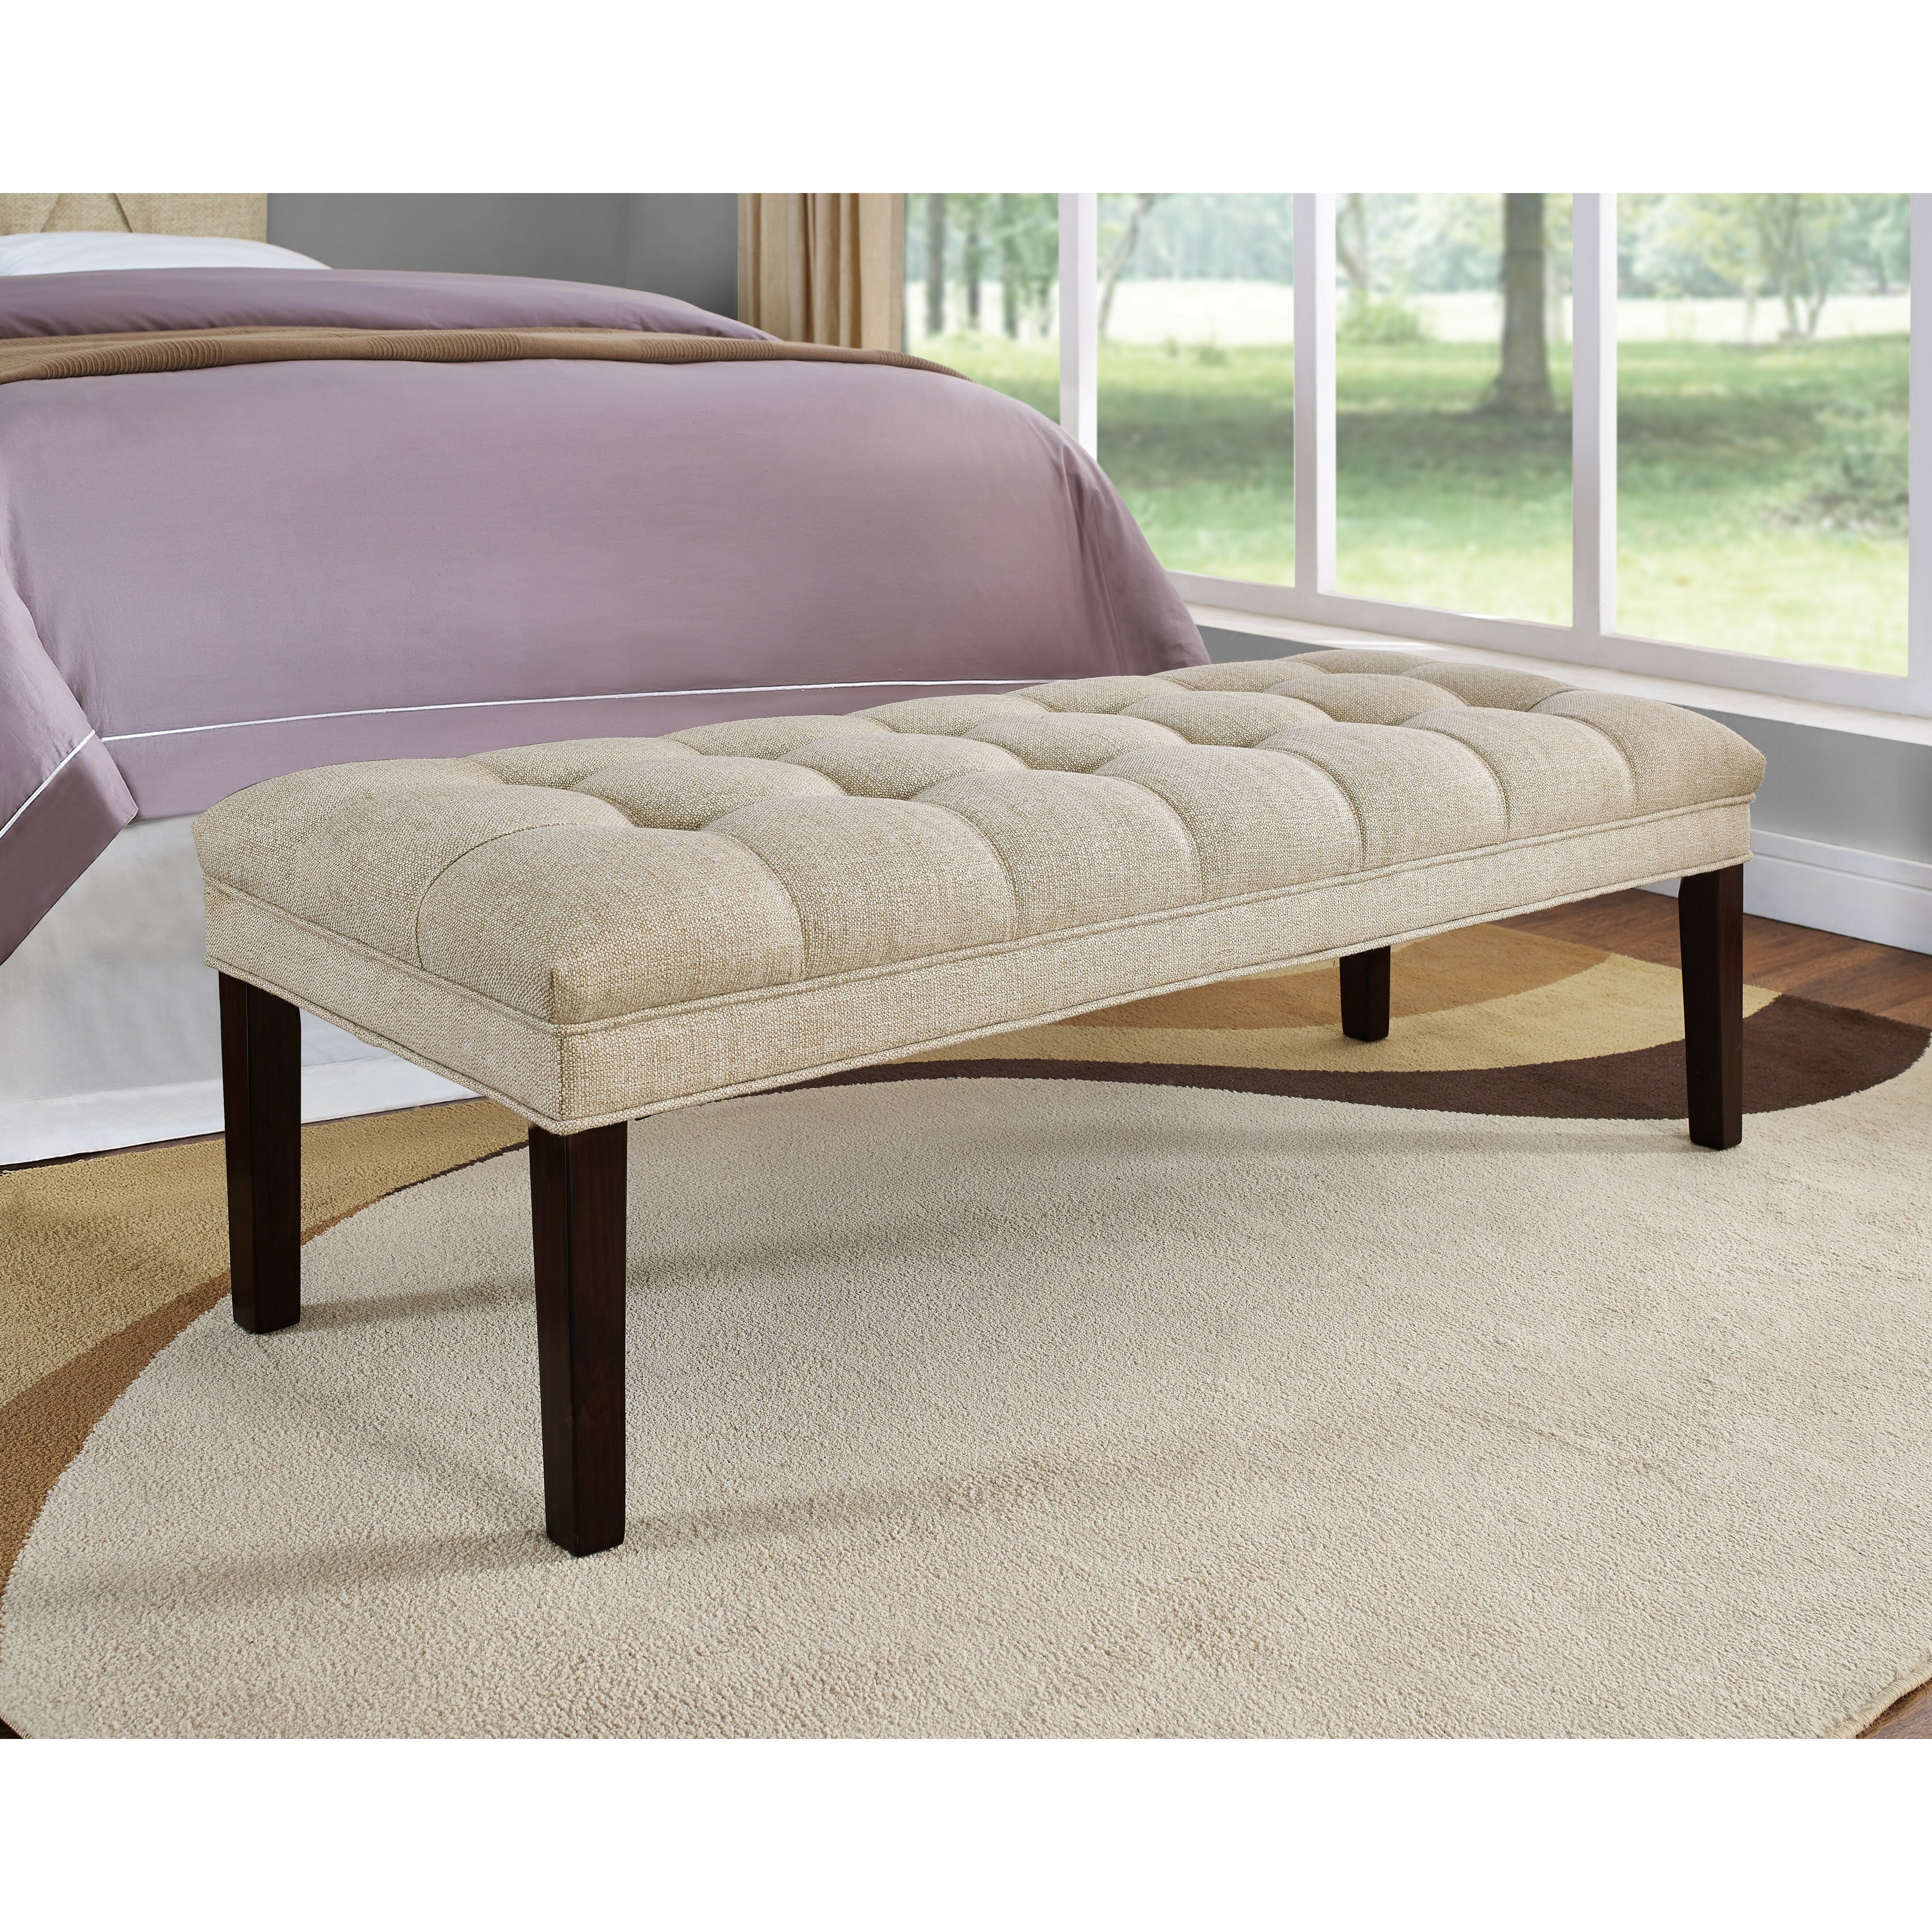 PRI Upholstered Tufted Bedroom Bench & Reviews  Wayfair